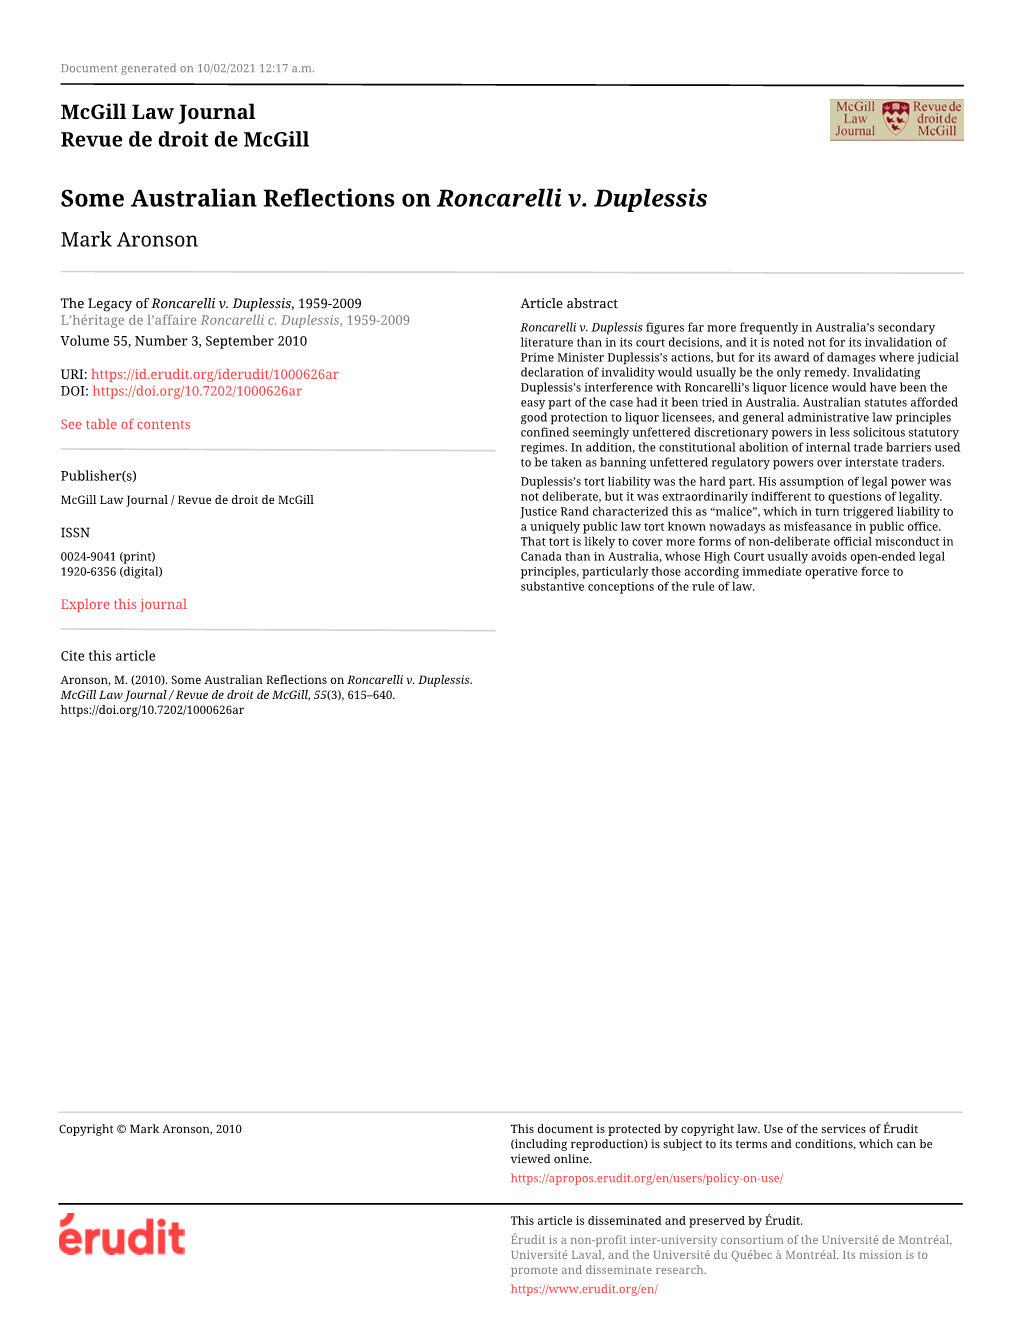 Some Australian Reflections on Roncarelli V. Duplessis Mark Aronson